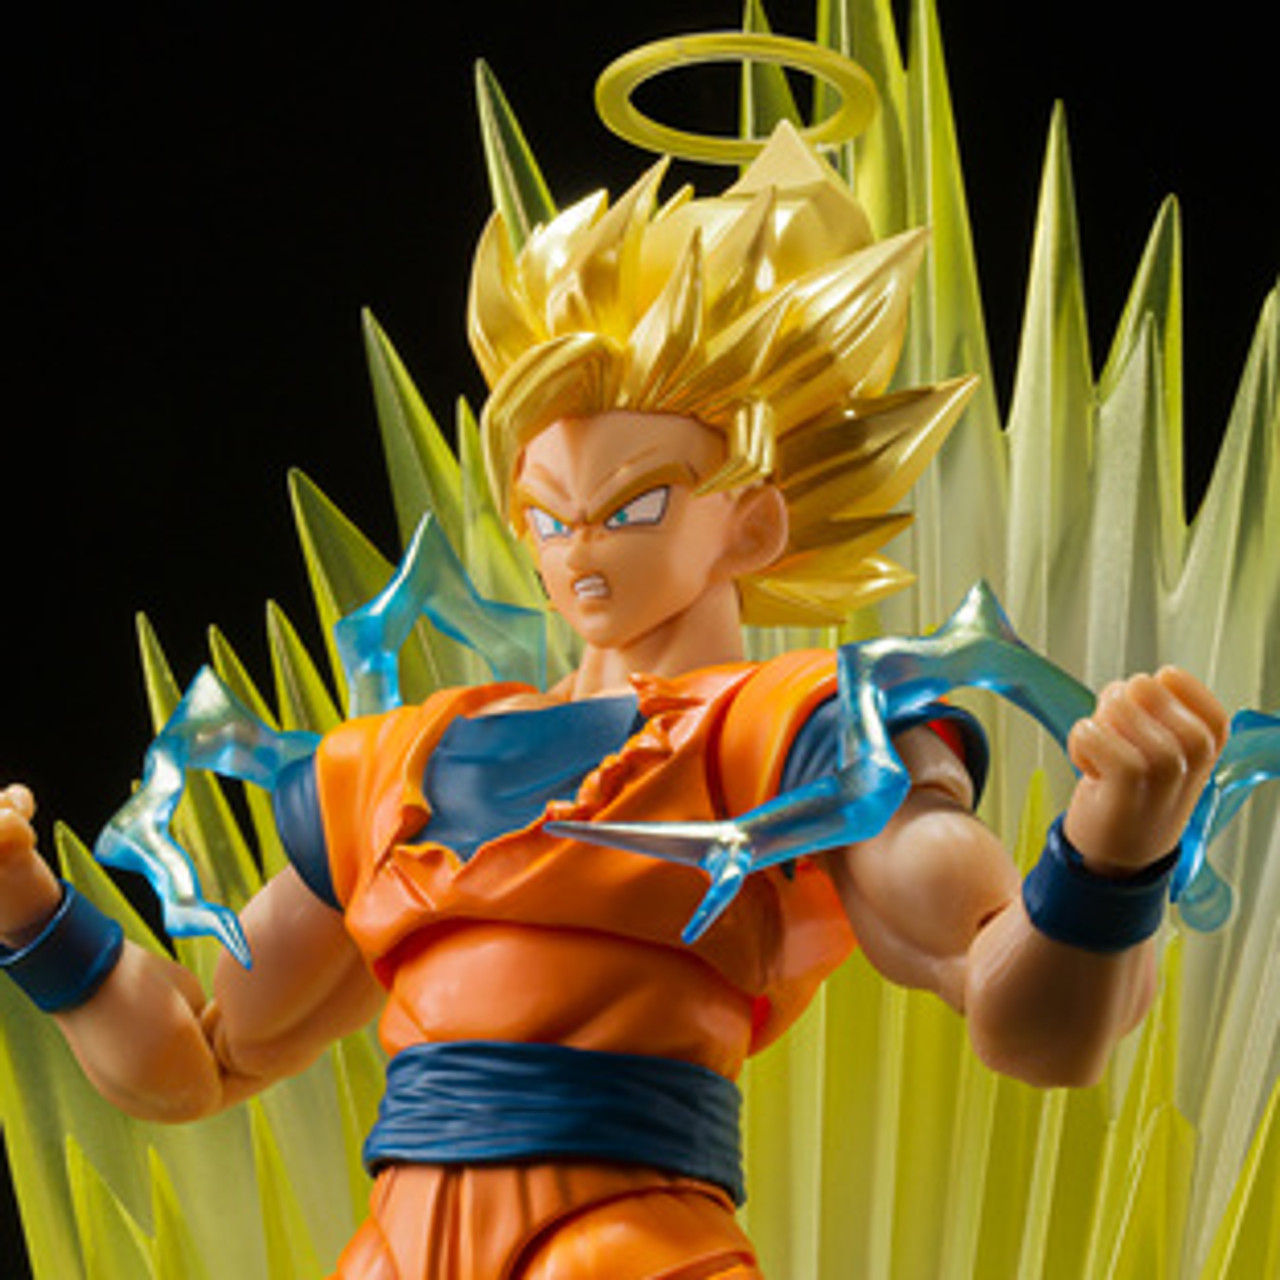 S H Figuarts Super Saiyan 2 Son Goku Exclusive Edition Dragon Ball Z Action Figure